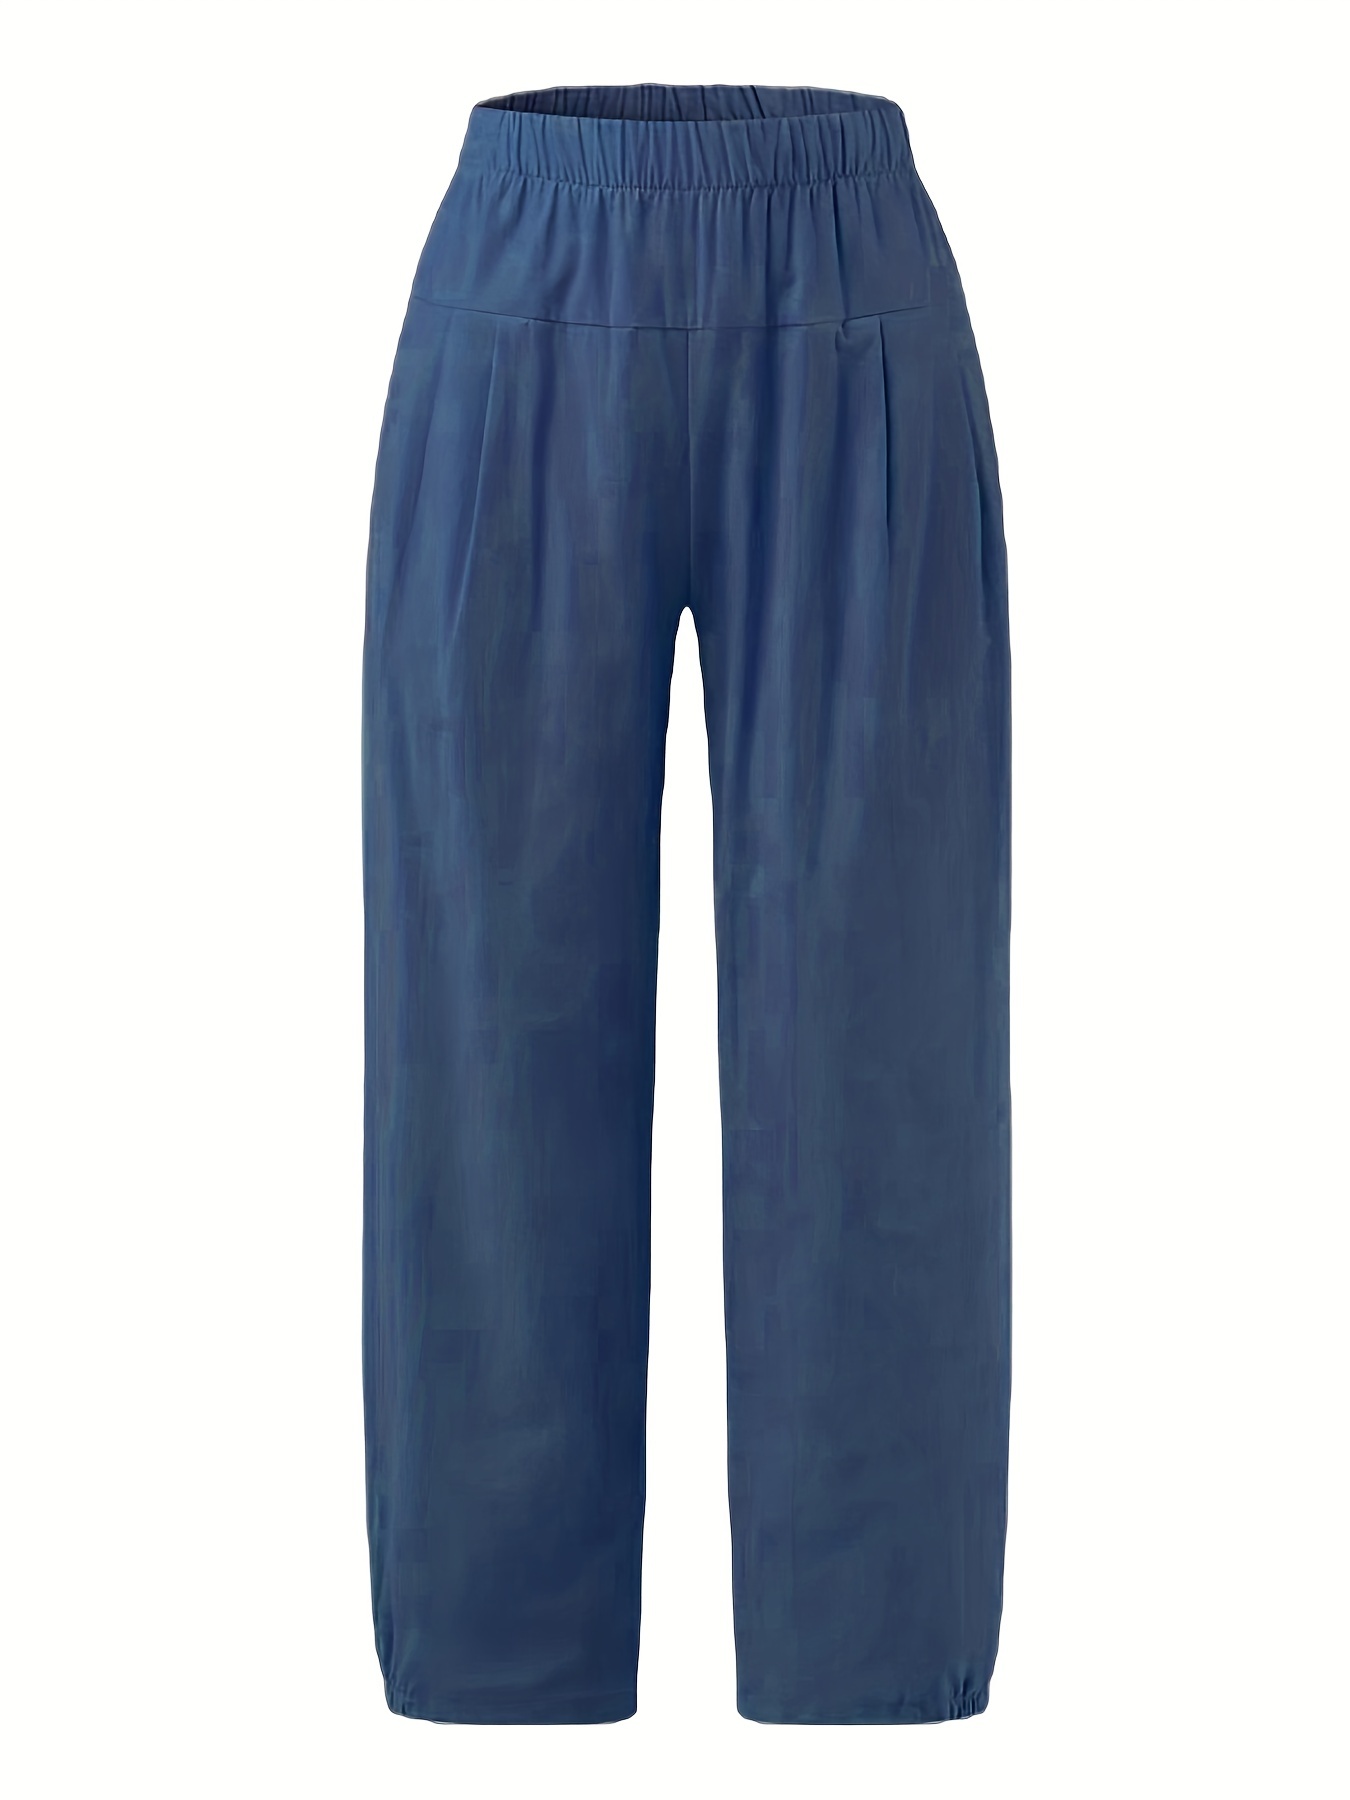 Solid High Waist Pants, Casual Split Capri Pants, Women's Clothing